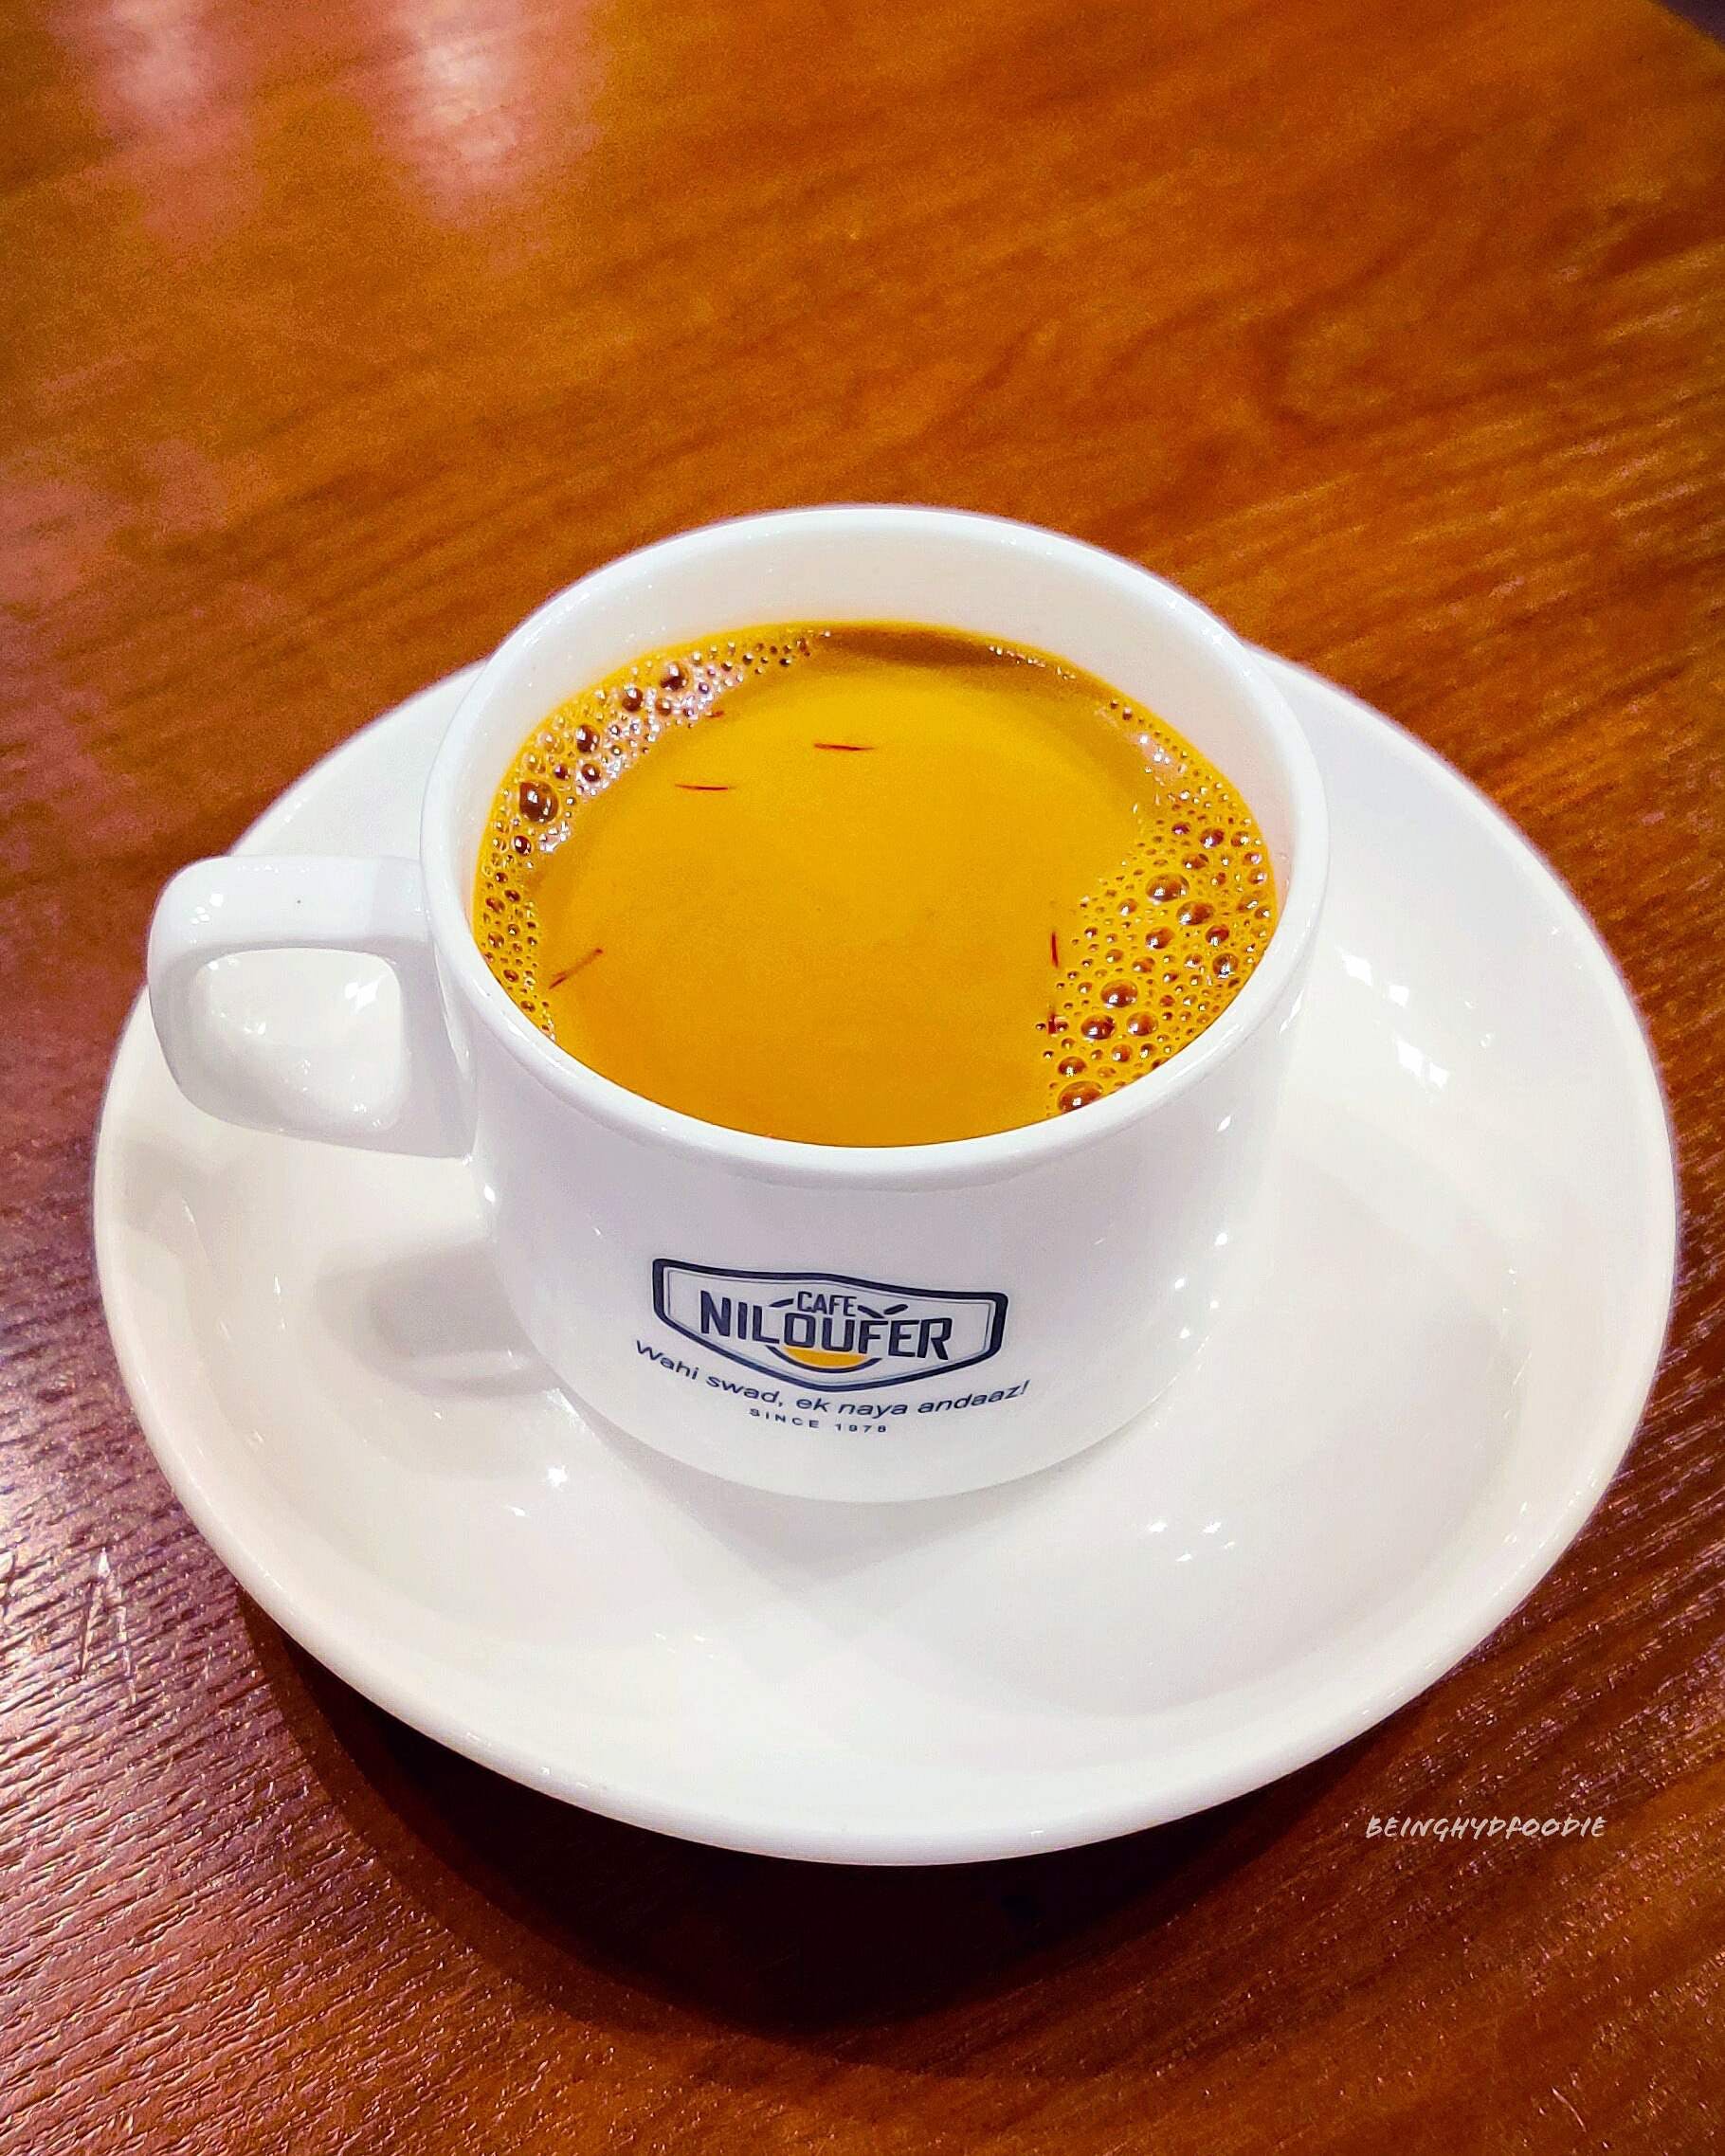 Cup,Espresso,Coffee cup,Drink,Cup,Coffee,Ristretto,Saucer,Cuban espresso,Lungo